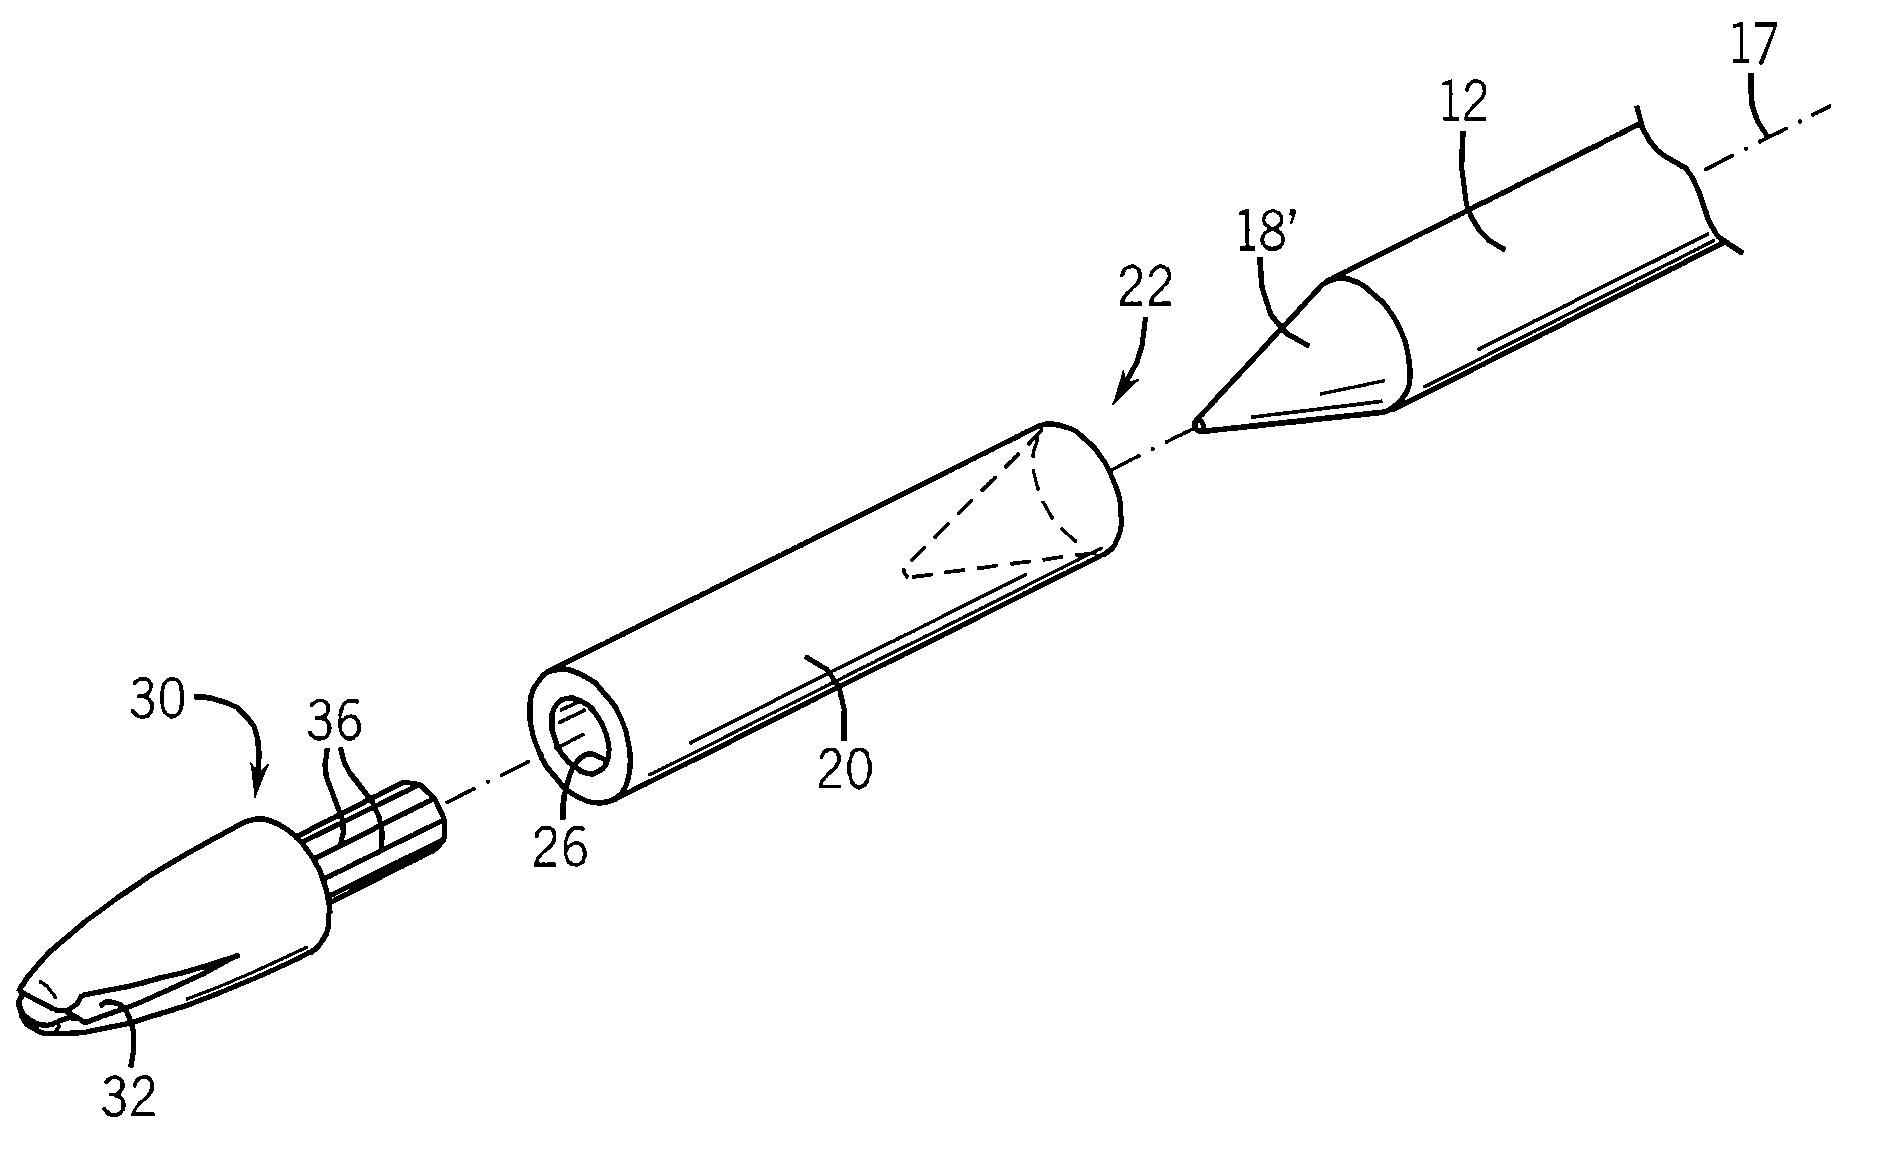 Nock adapter for bowfishing arrow